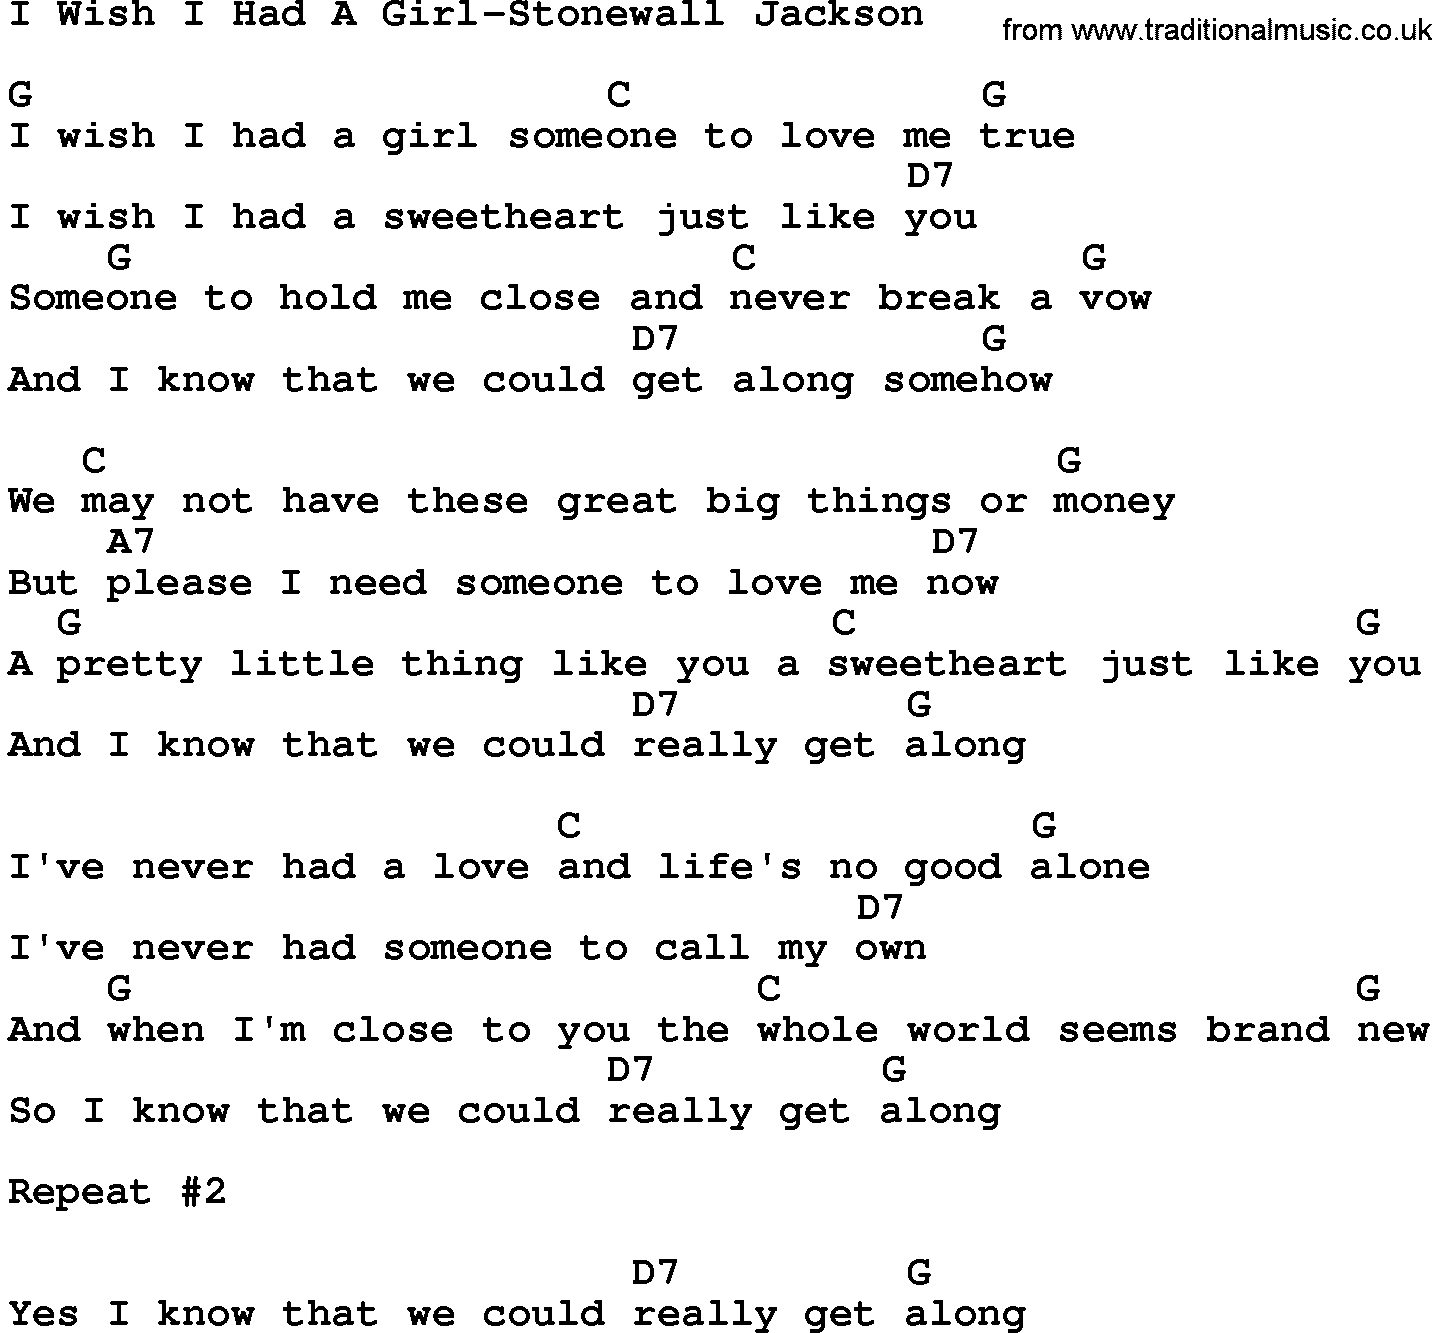 Country music song: I Wish I Had A Girl-Stonewall Jackson lyrics and chords